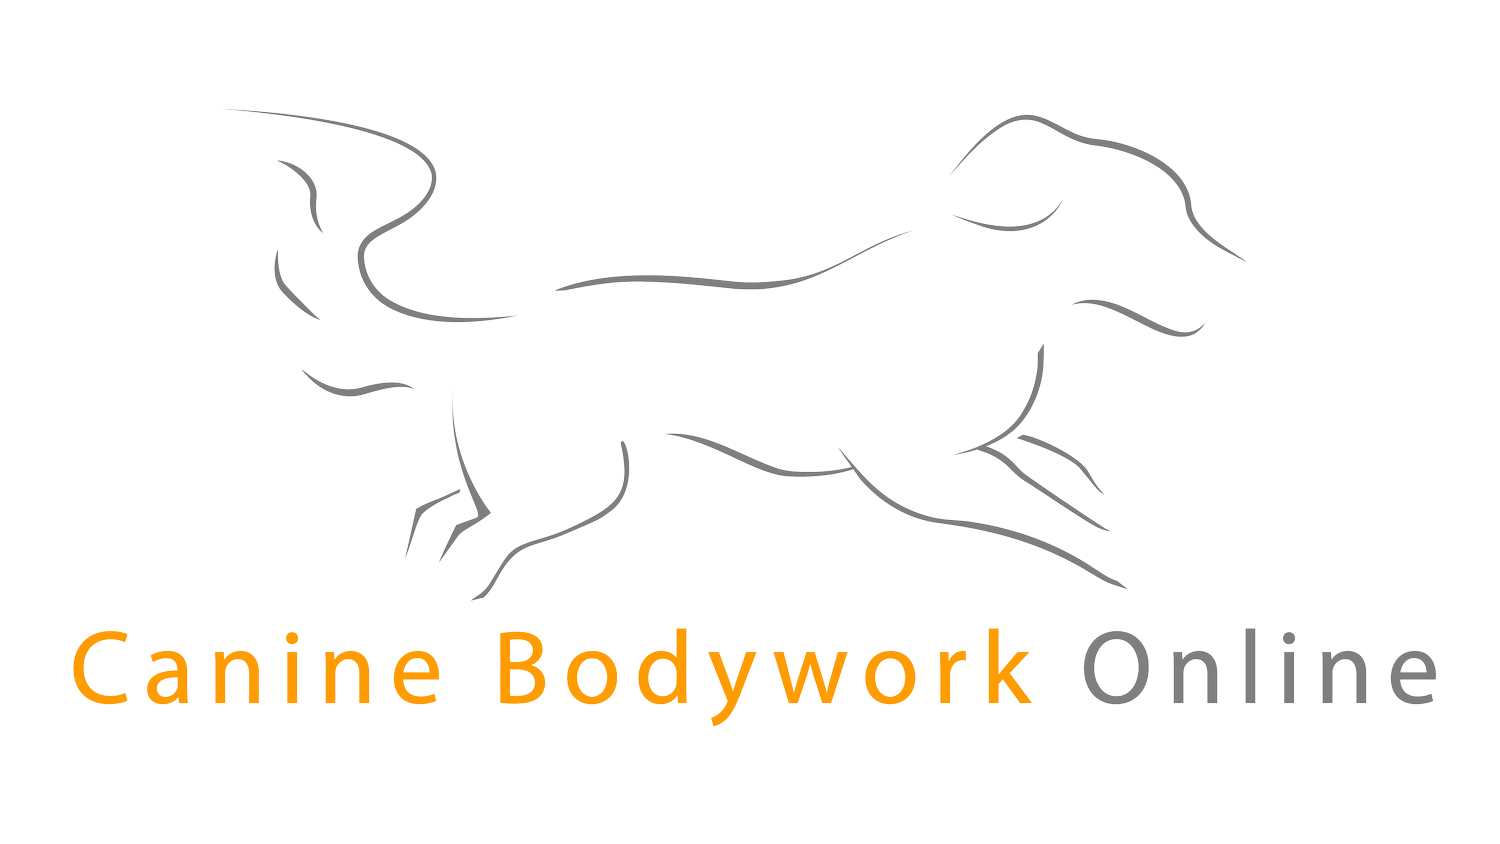 Canine Bodywork Online